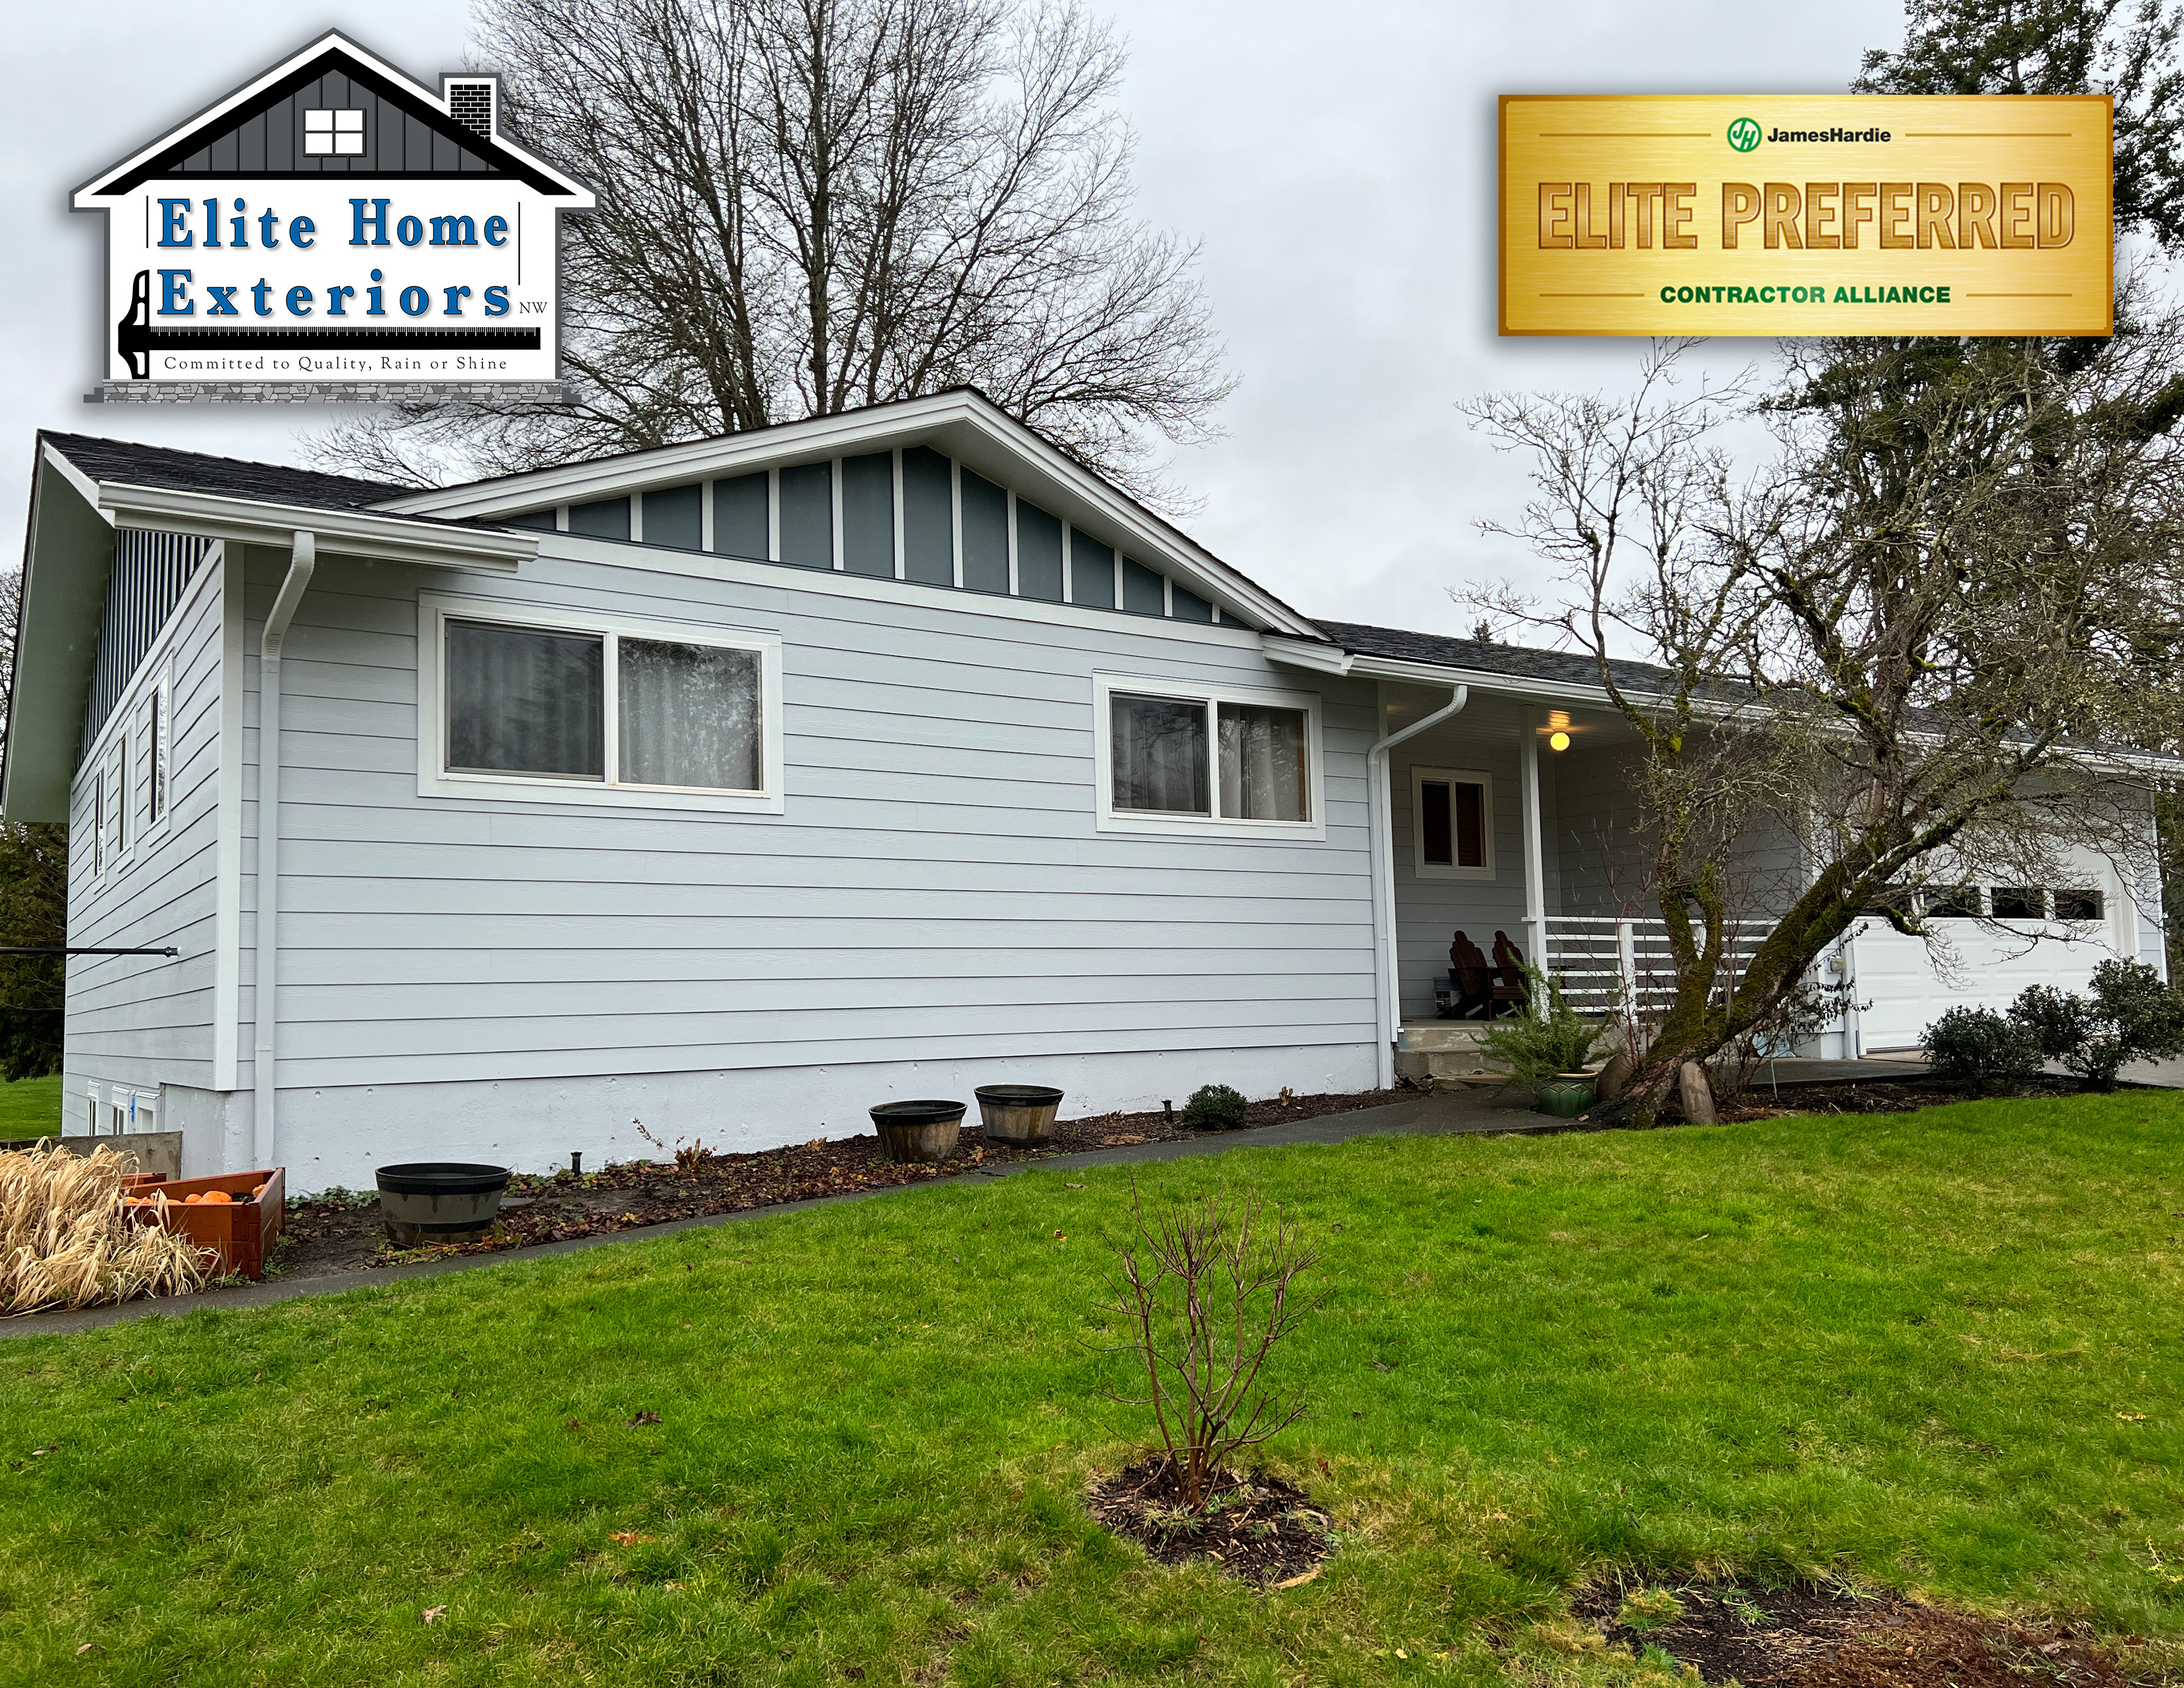 Elite Preferred James Hardie Siding Pros Contractor in Portland Oregon. Elite Home Exteriors NW